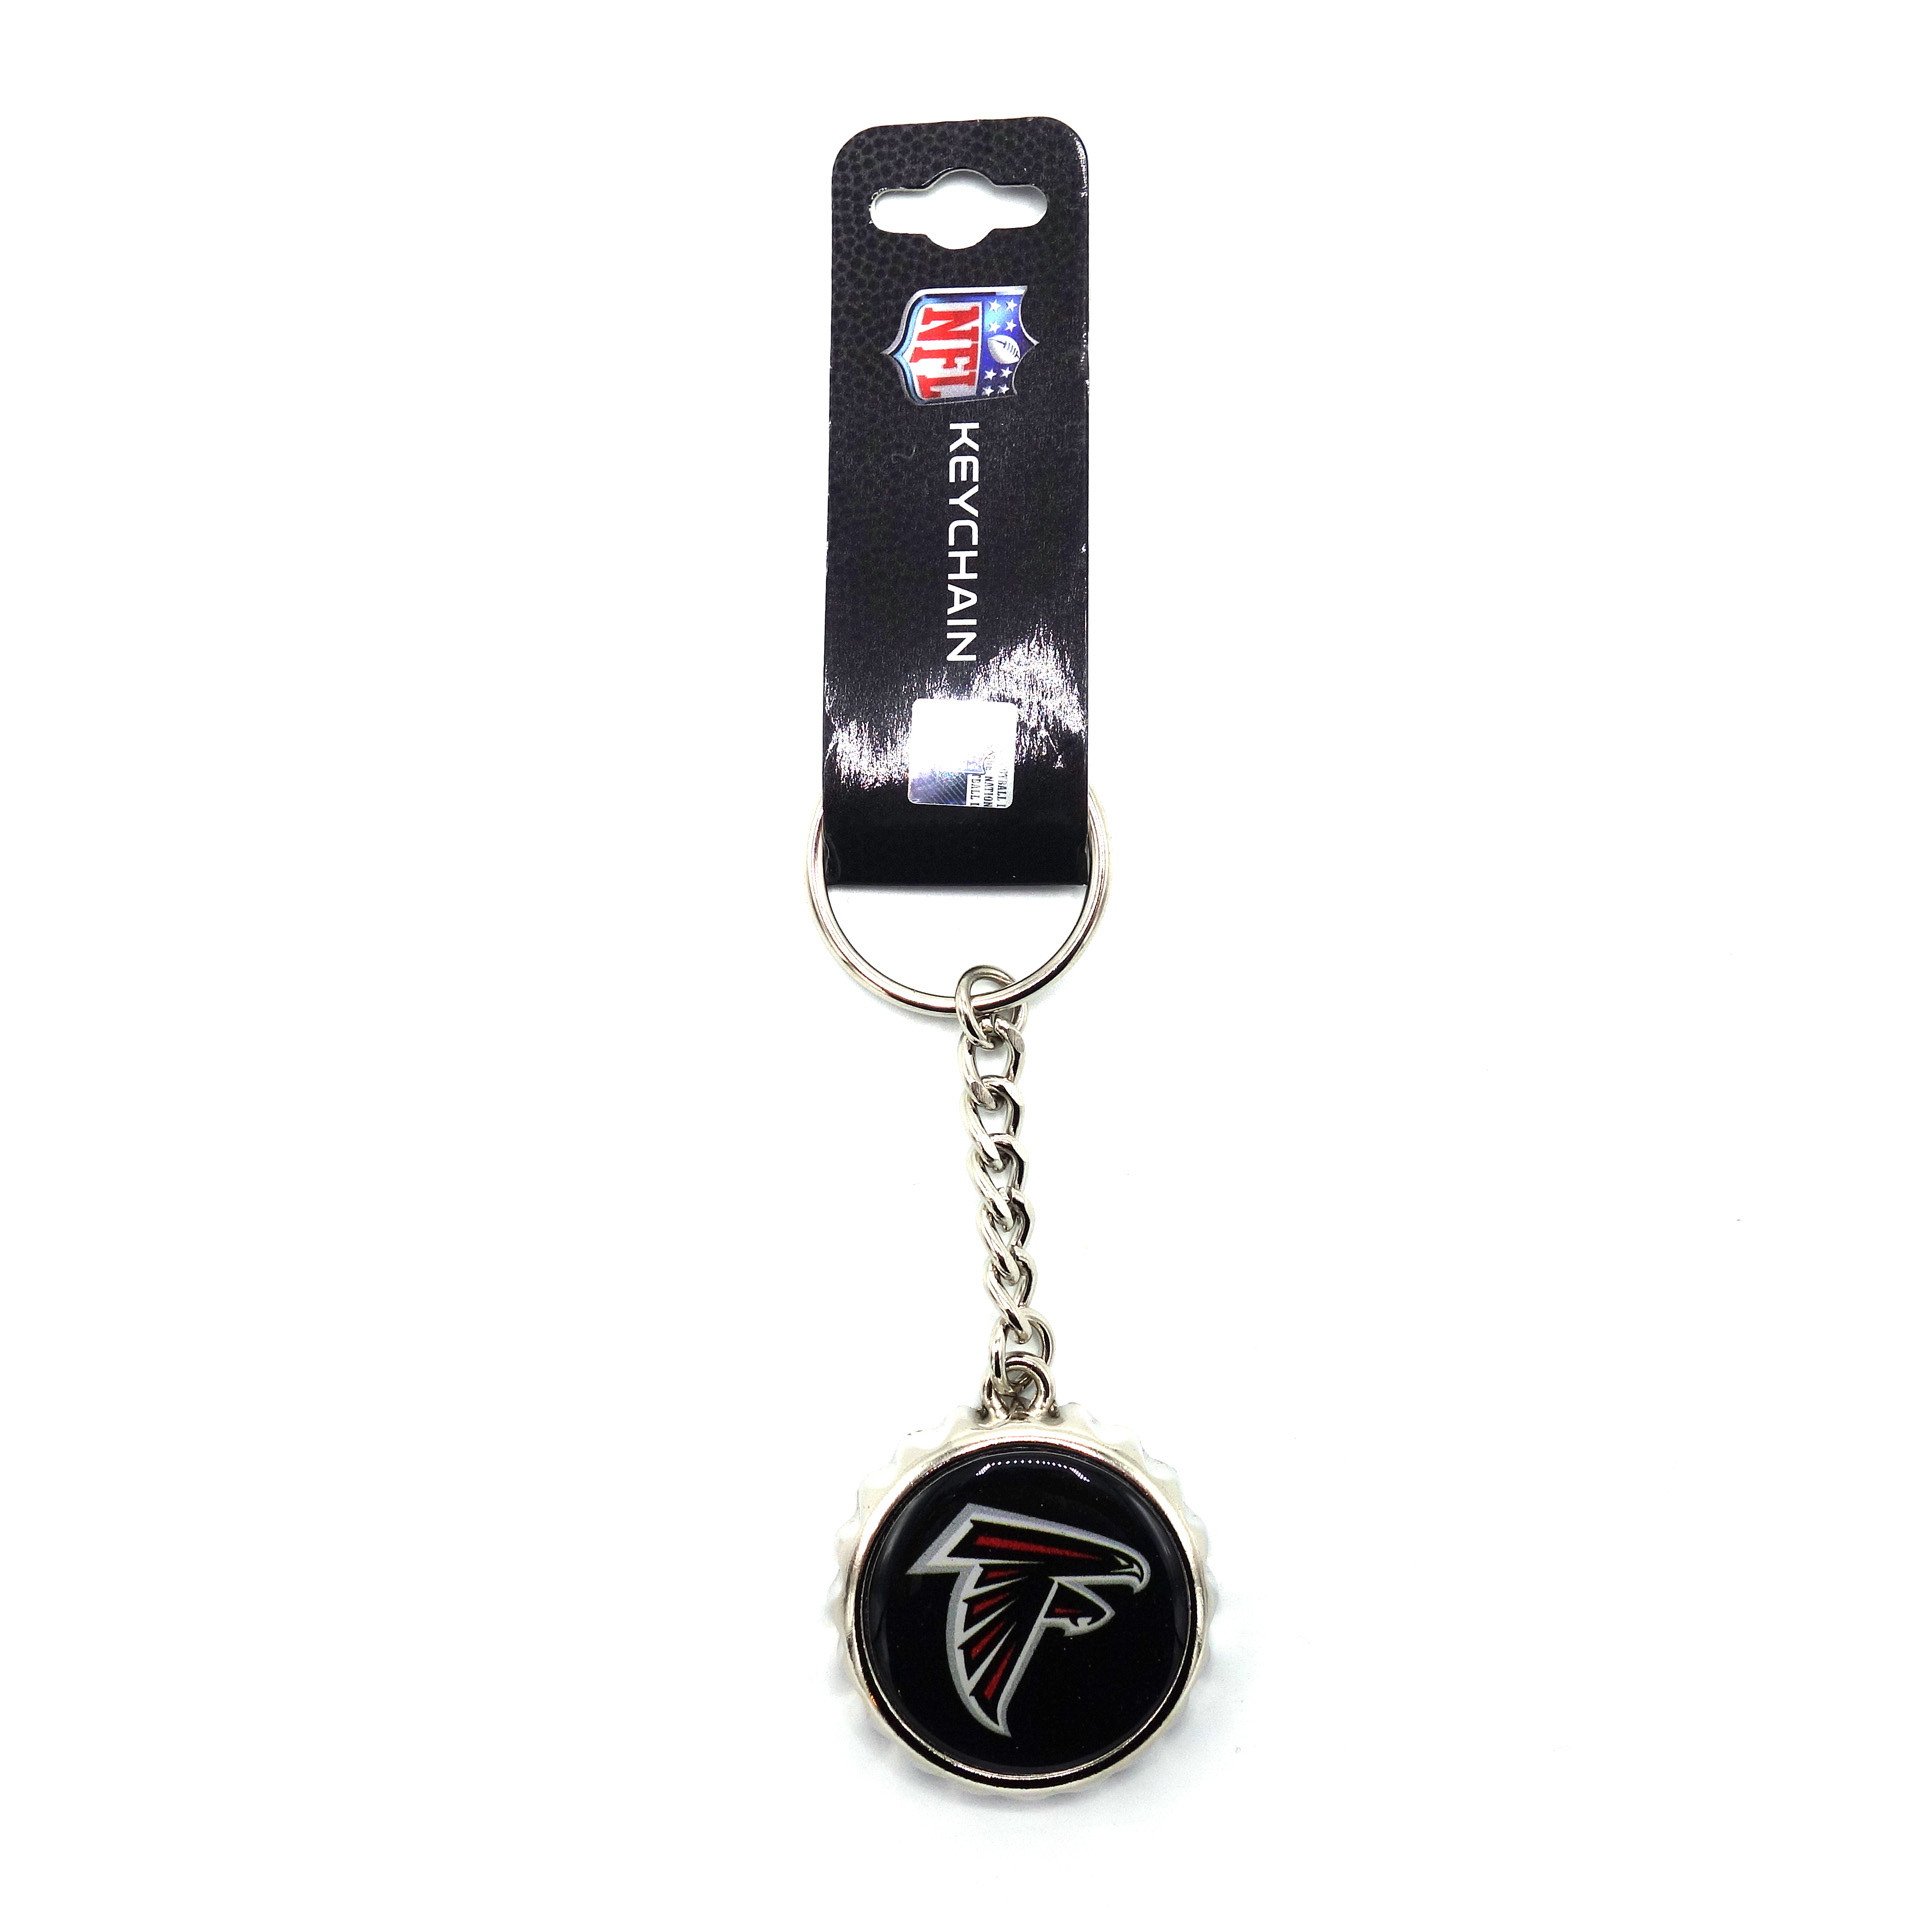 NFL Kronkorken Schlüsselanhänger Atlanta Falcons Flaschenöffner   